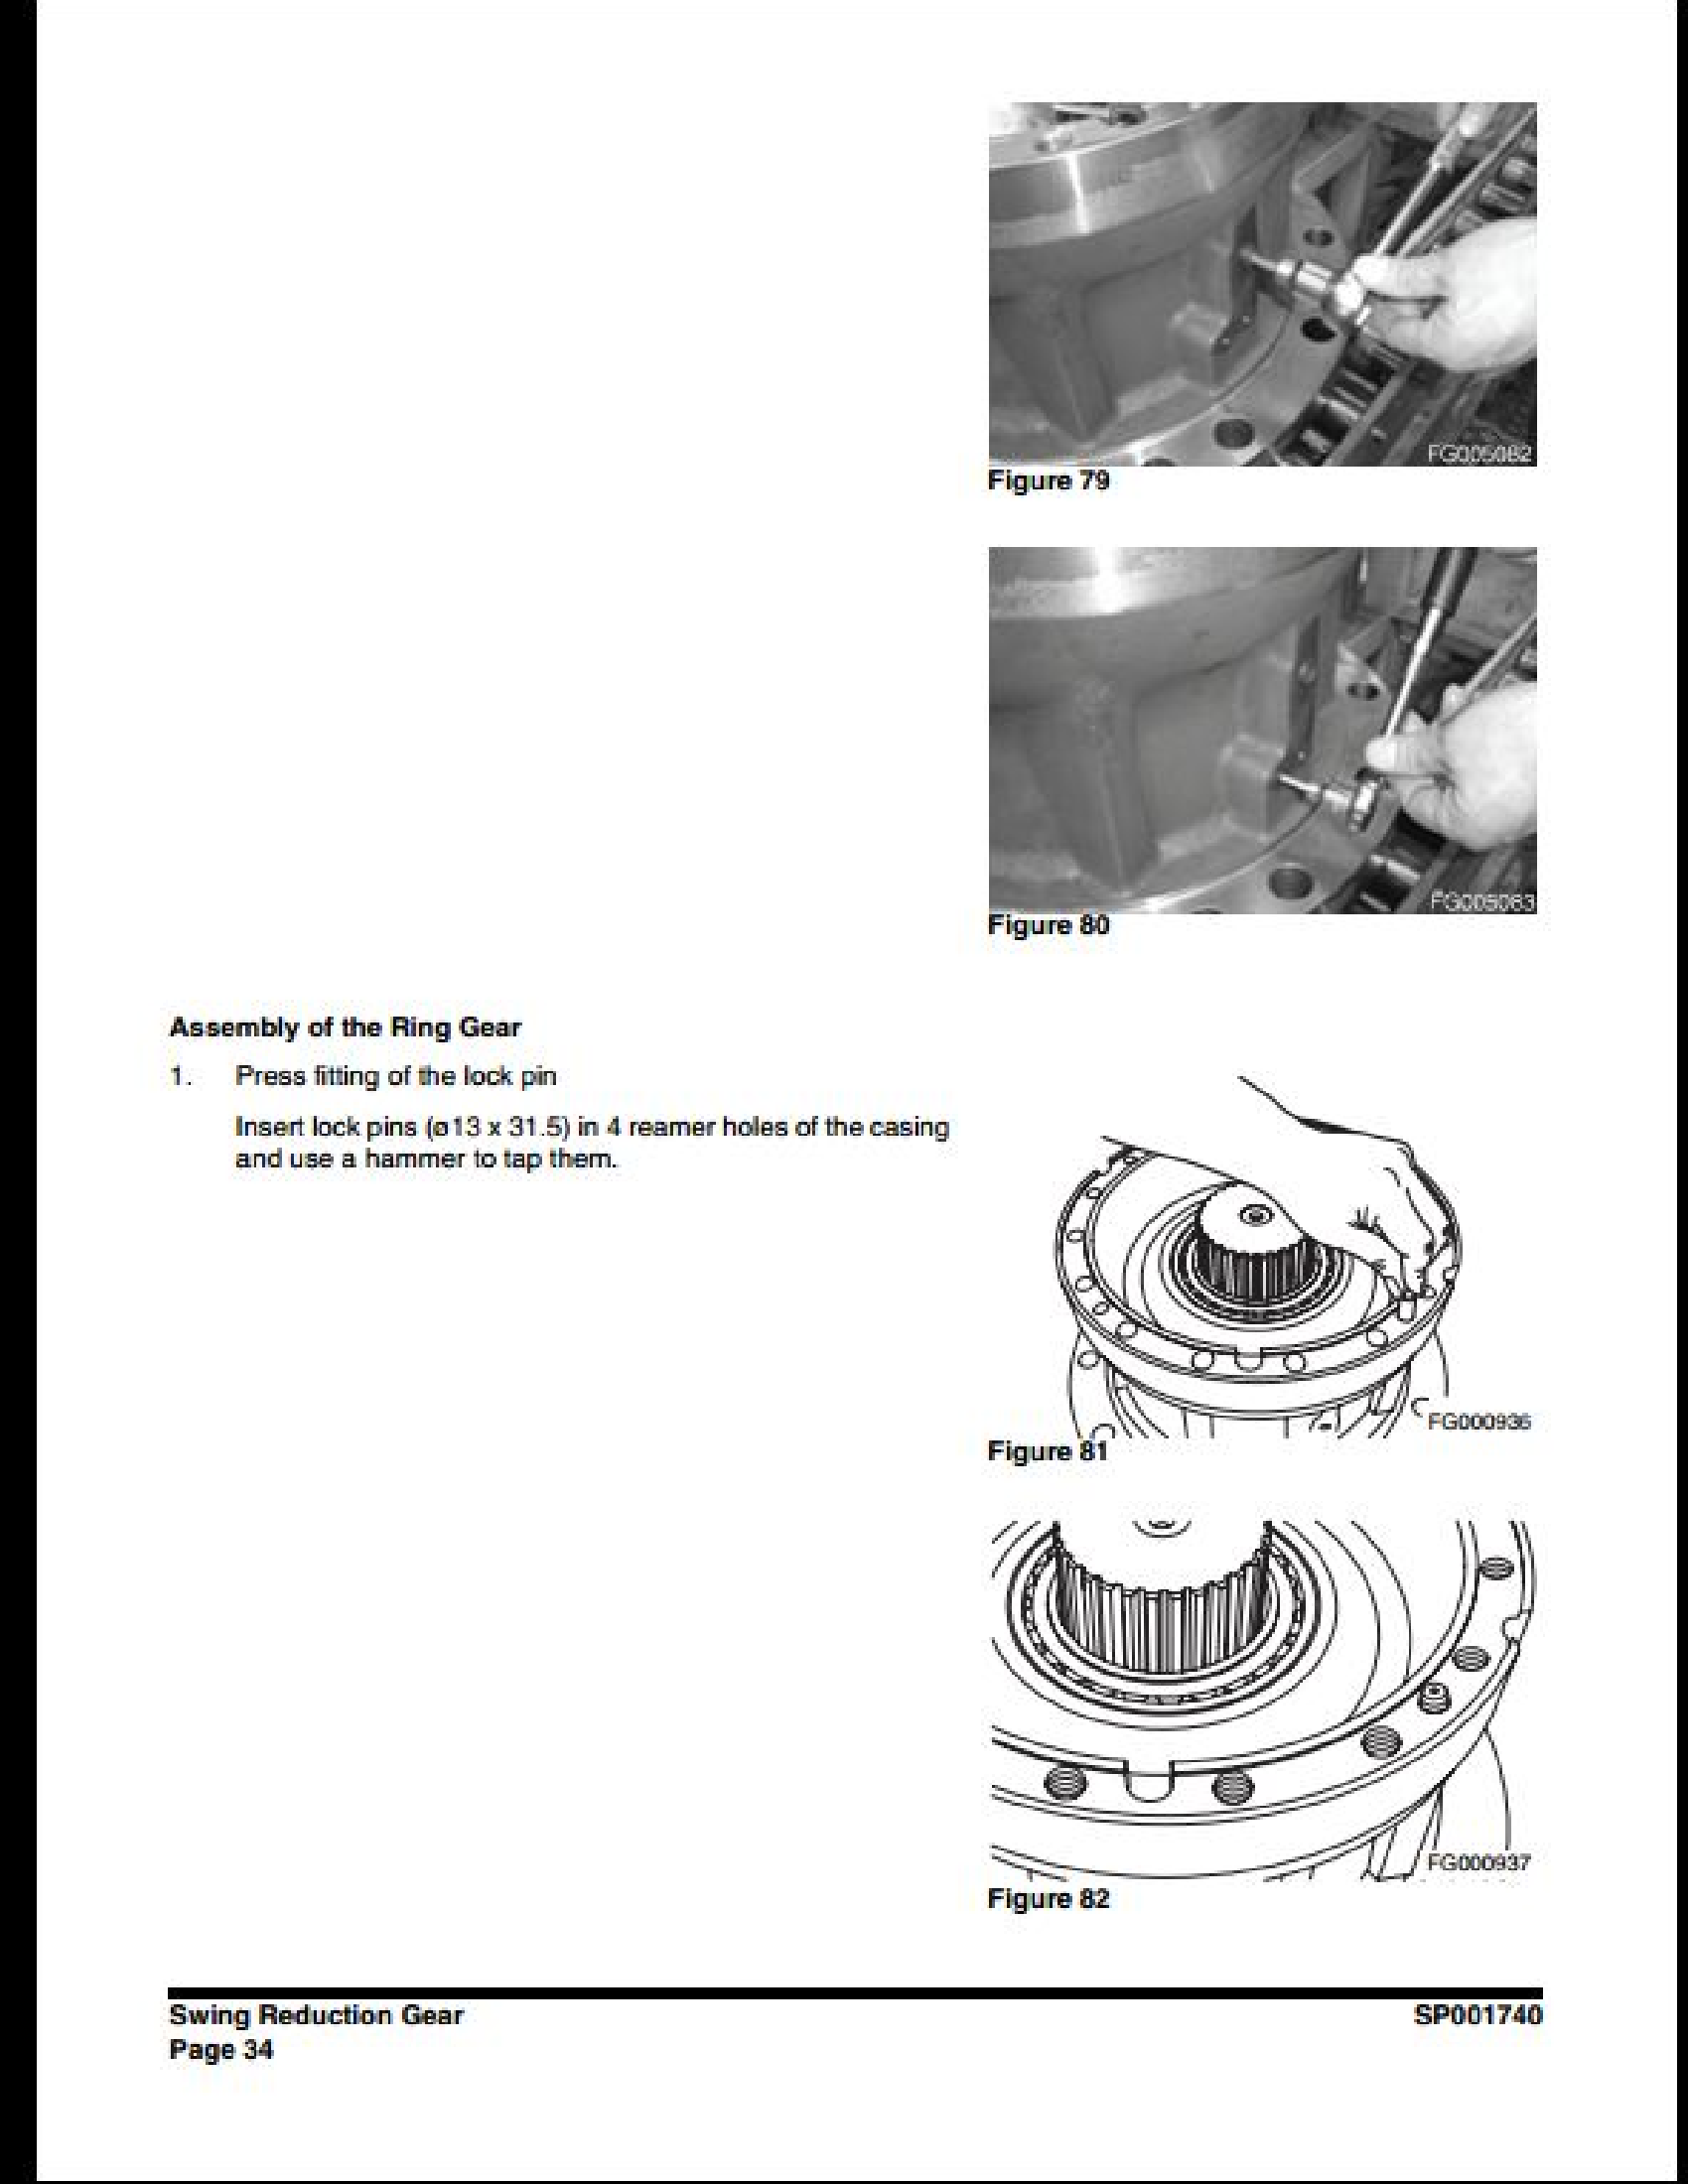 Doosan DX340LCA Crawled Excavator manual